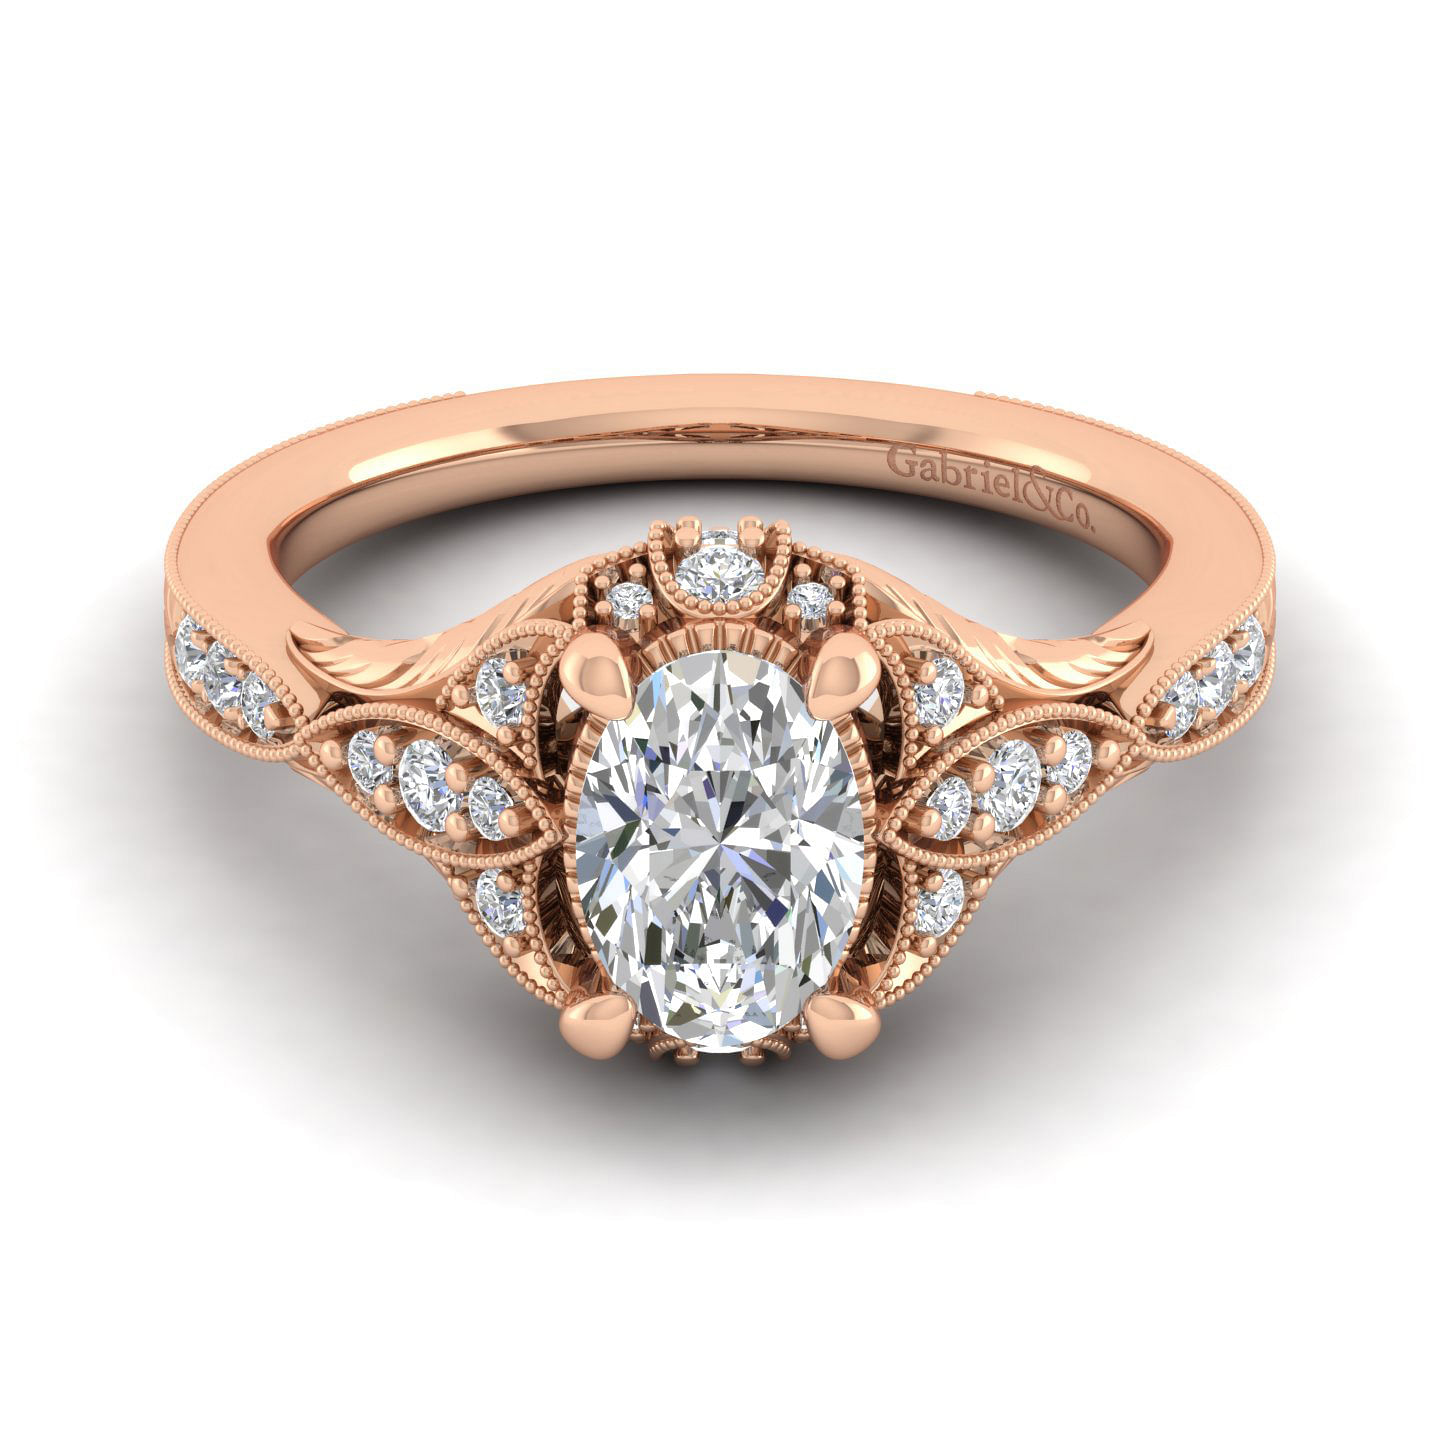 Unique 14k Rose Gold Vintage Inspired Oval Halo Diamond Engagement